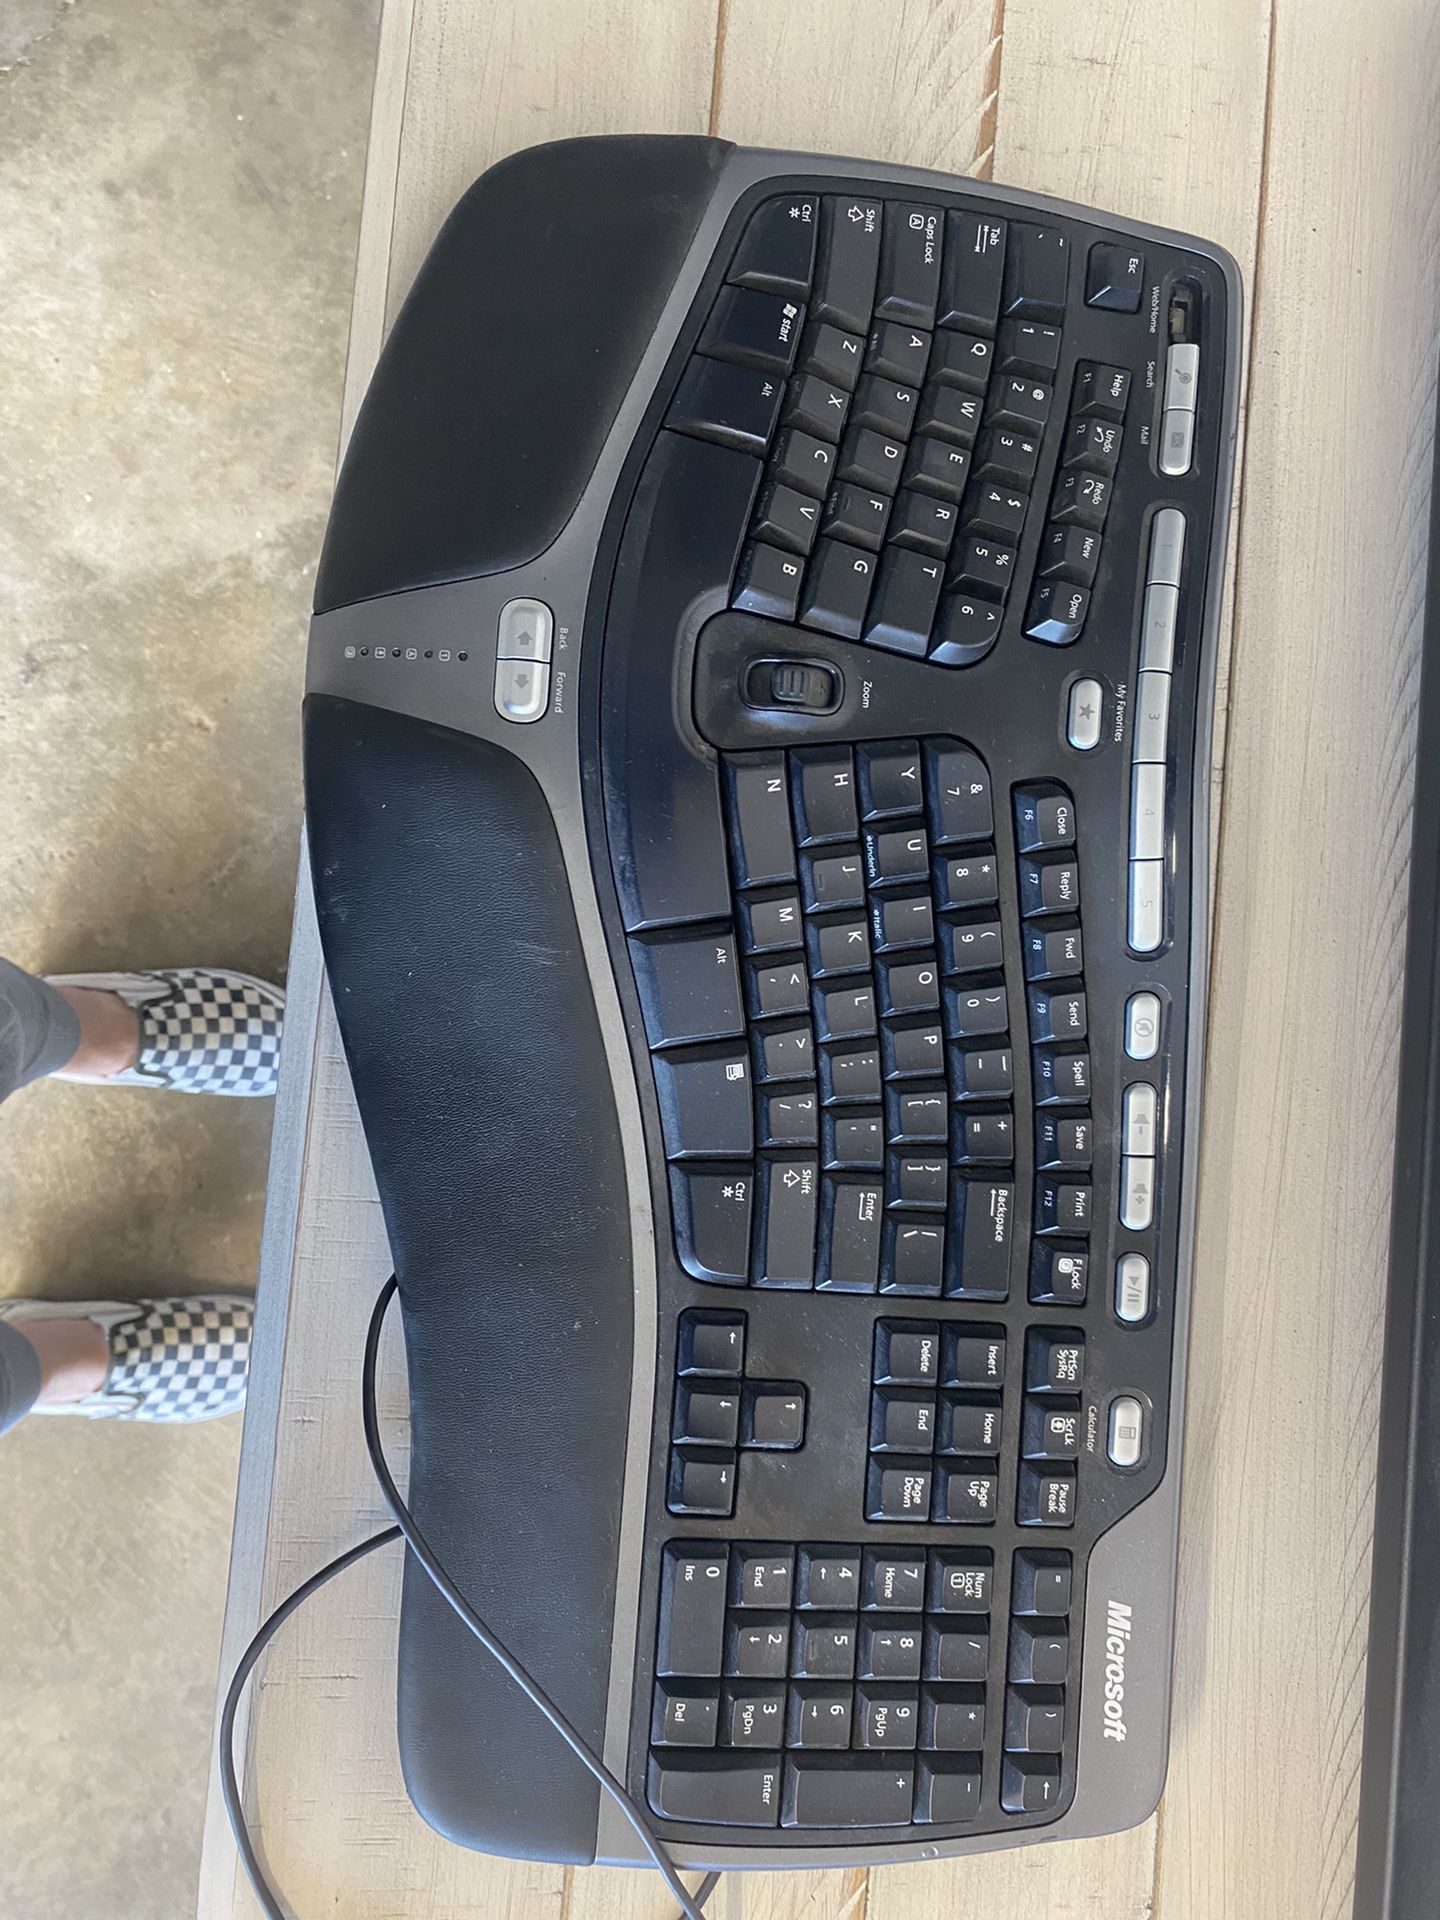 Microsoft Keyboard With One Missing Key